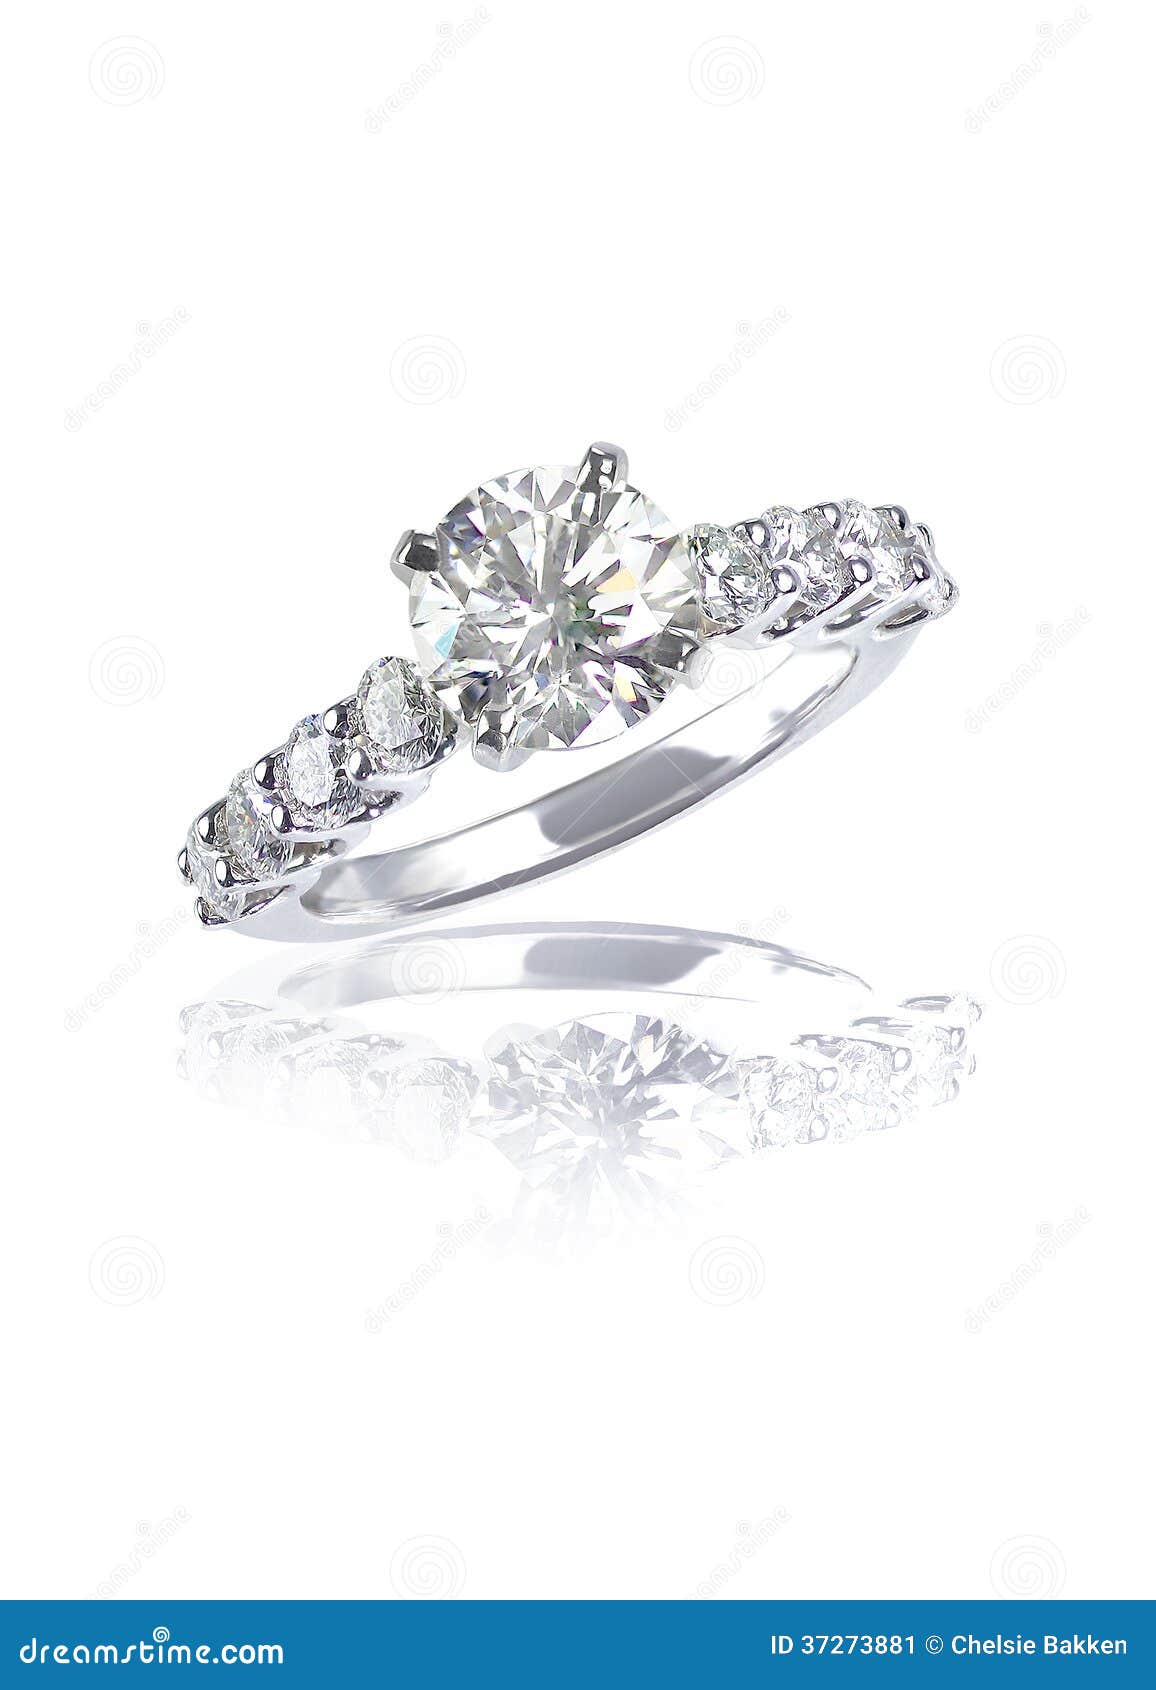 large brilliant cut modern diamond engagement wedding ring